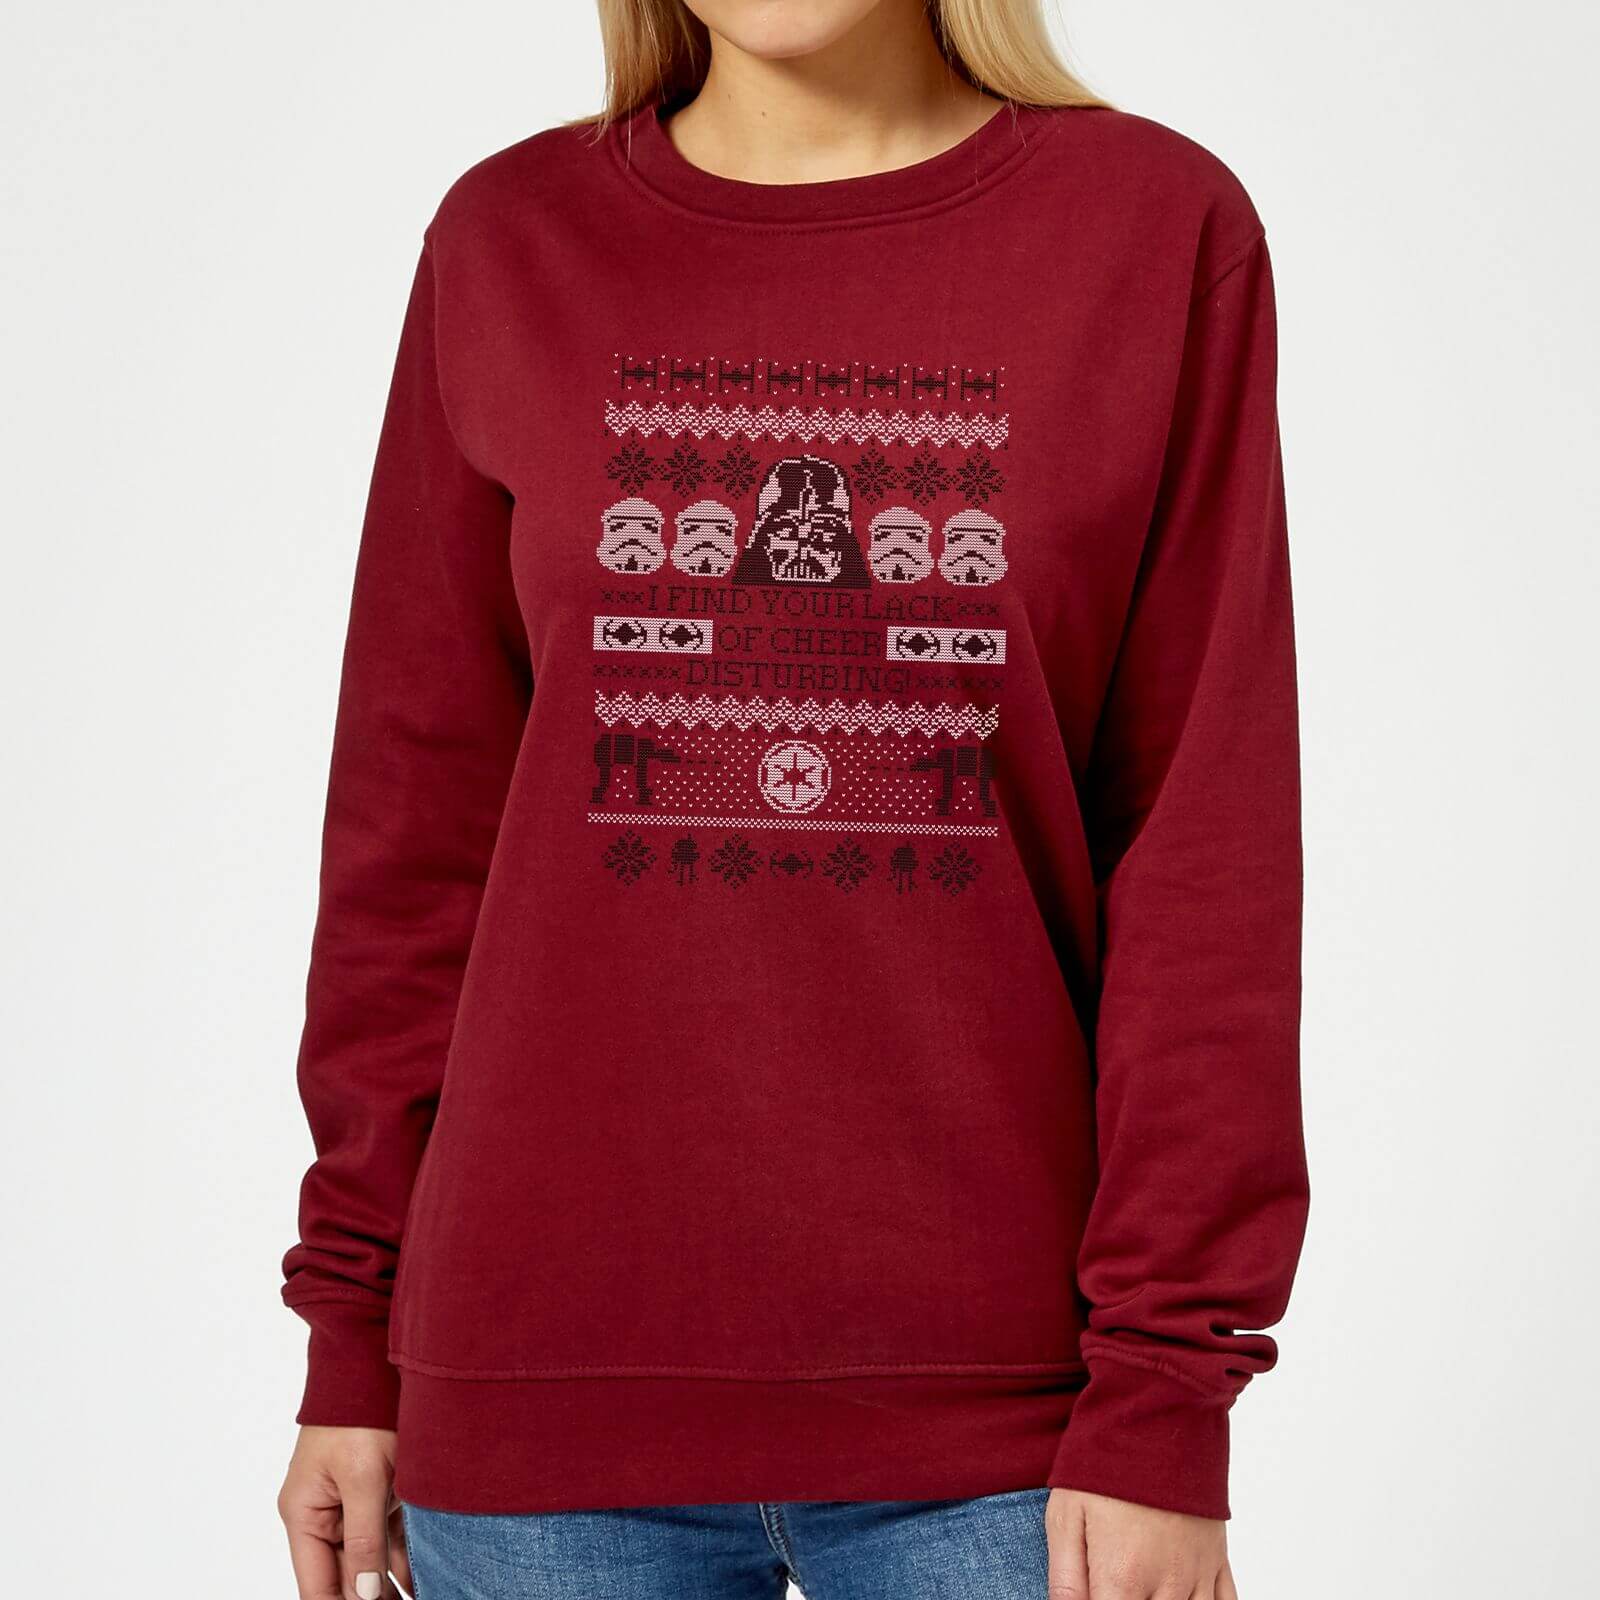 Star Wars I Find Your Lack Of Cheer Disturbing Women's Christmas Sweatshirt - Burgundy - XL